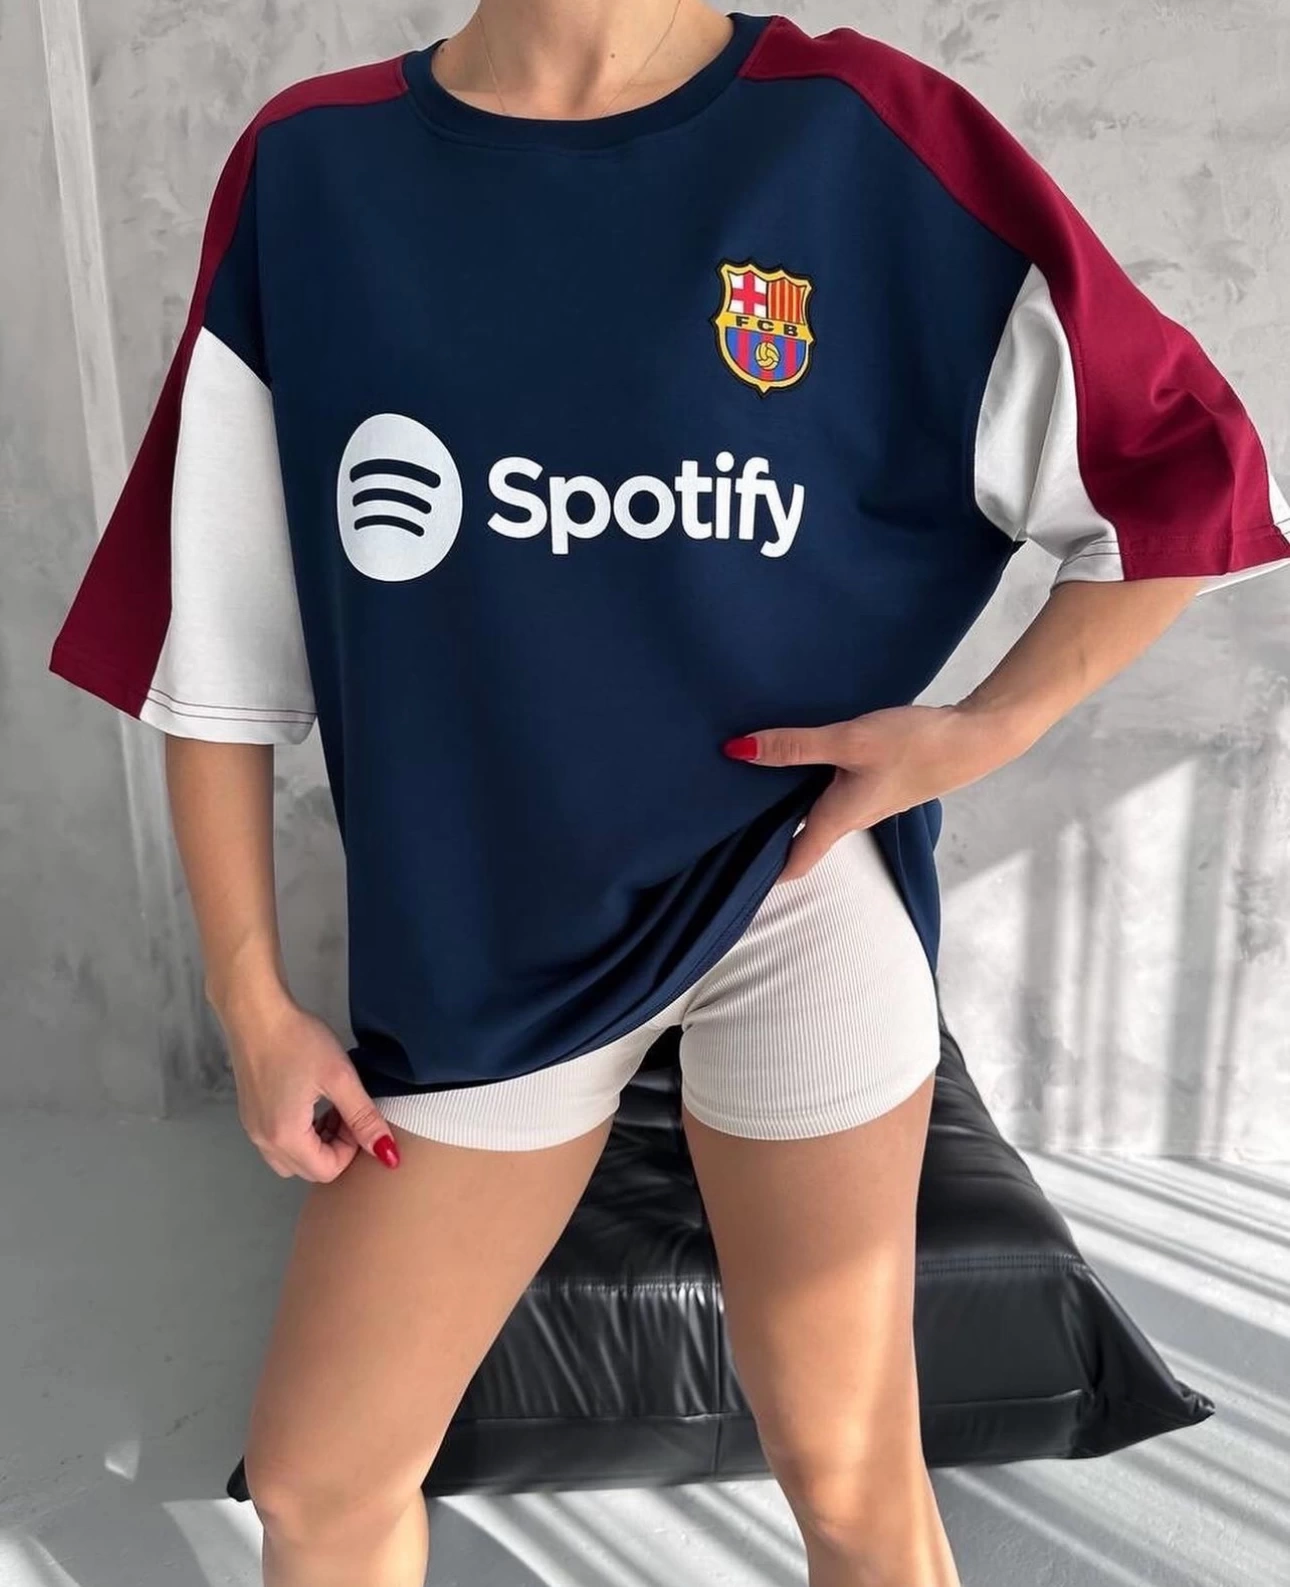 Spotify Unisex Oversize Tshirt